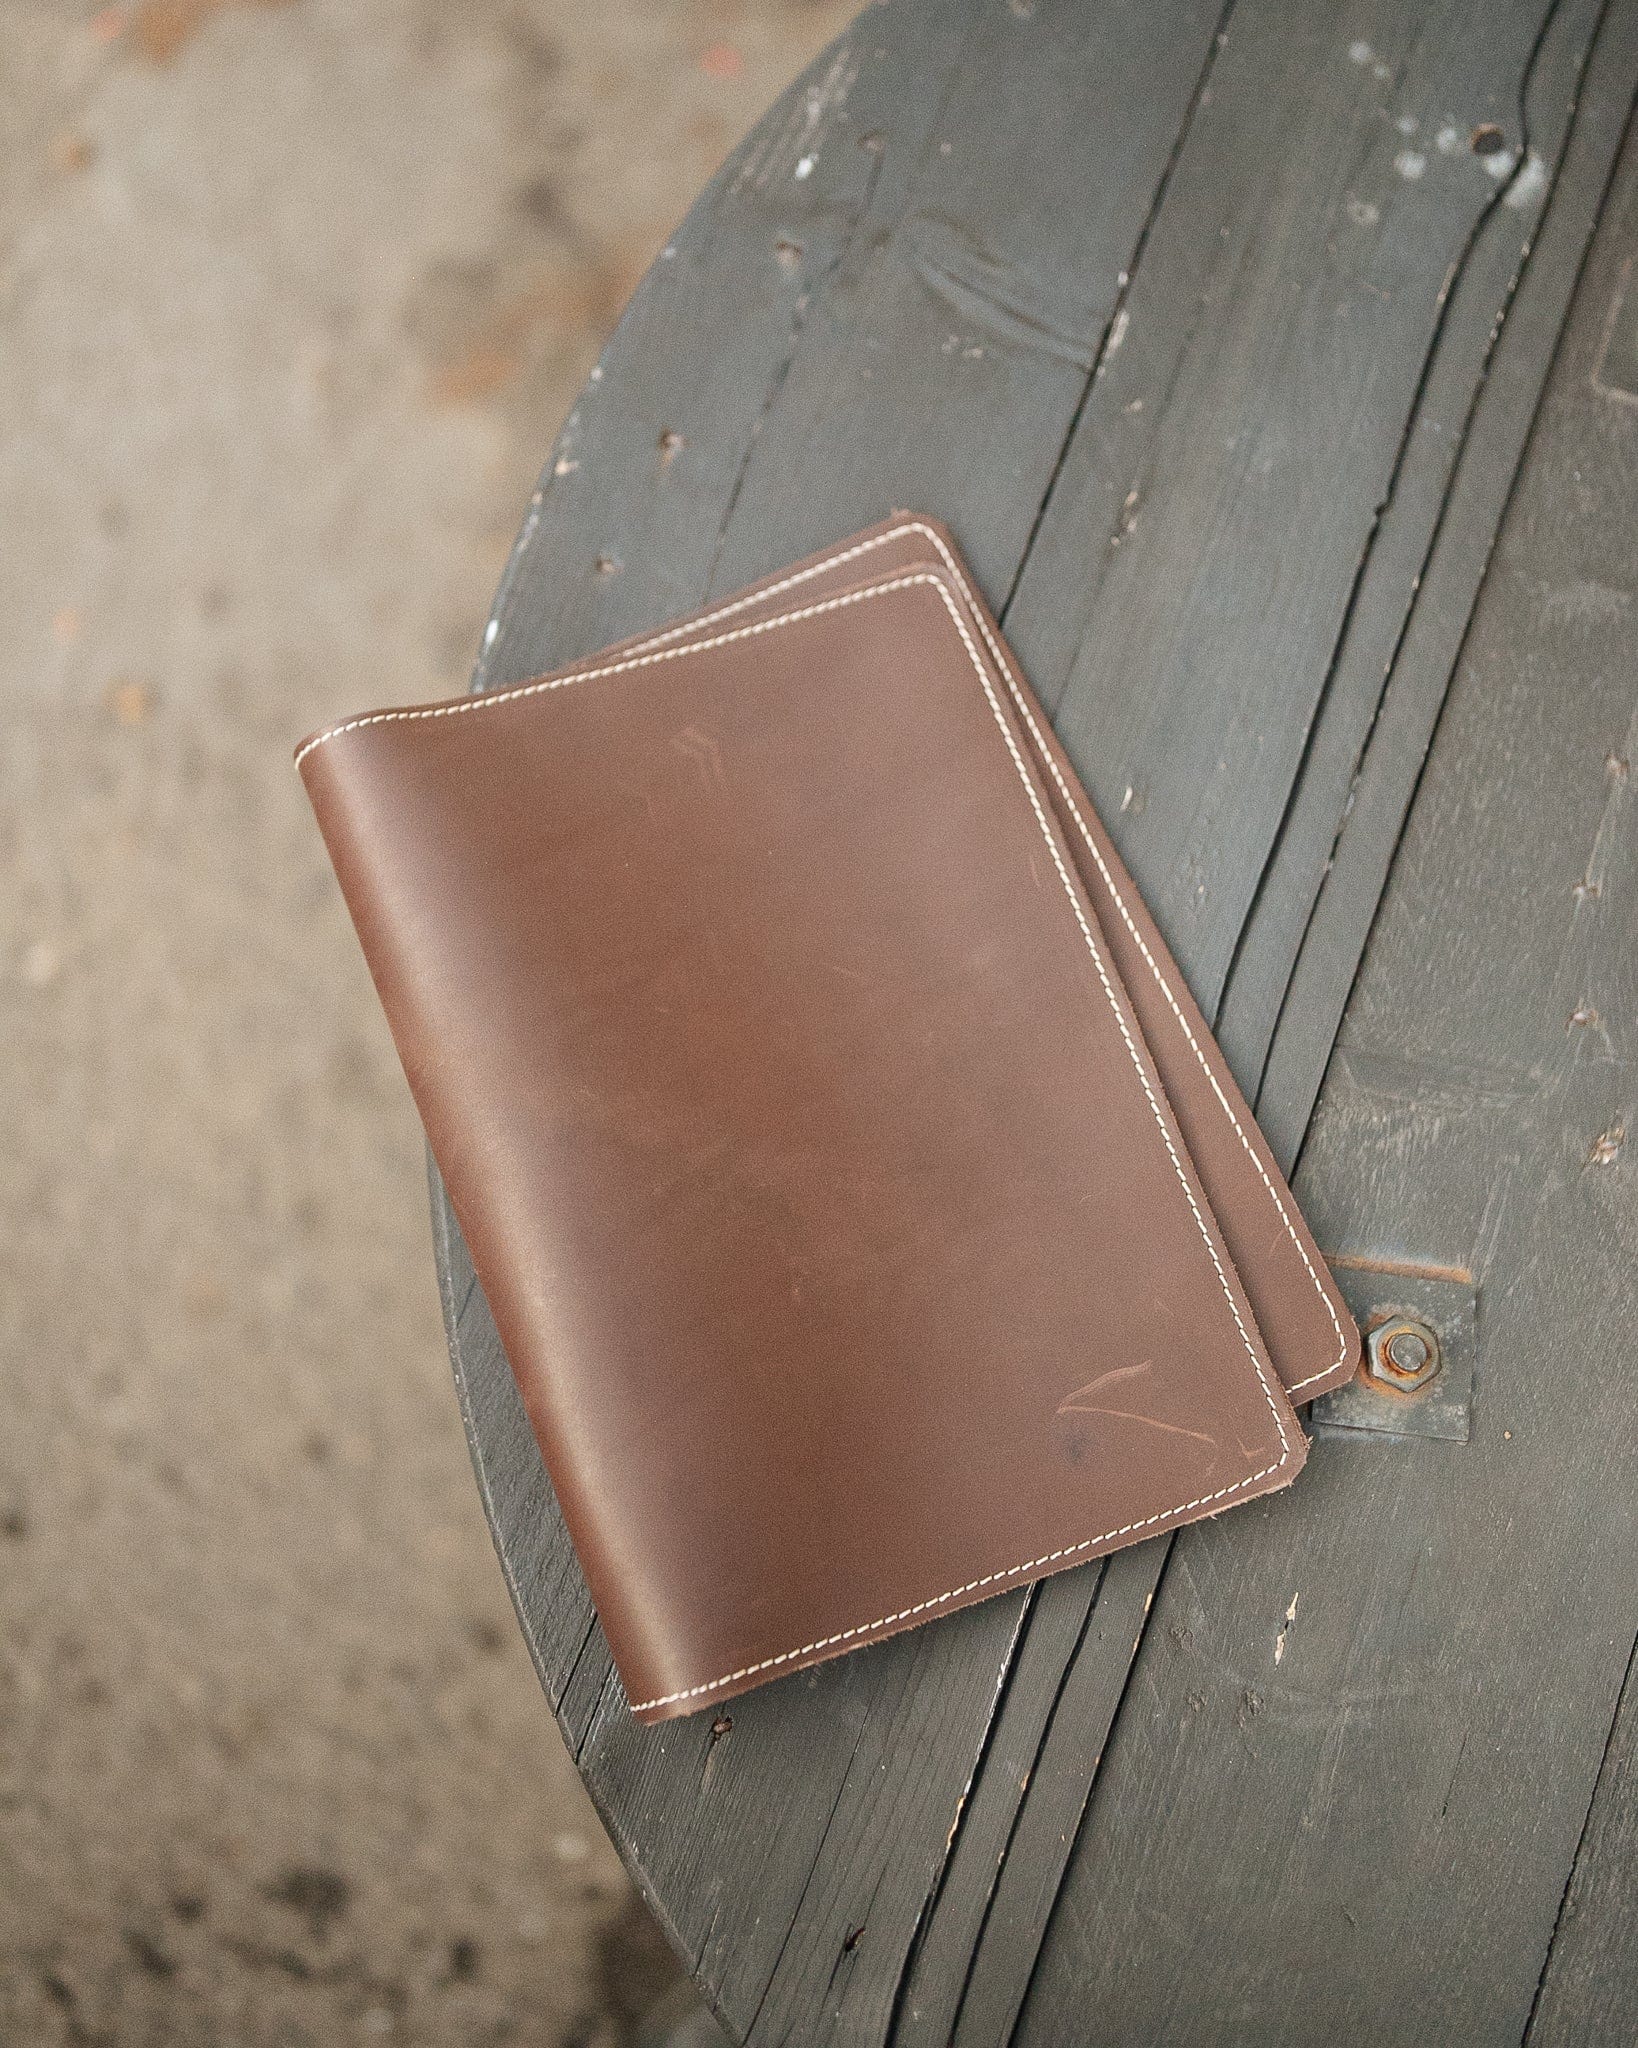 The Real McCaul Leathergoods Dark Brown / Beige A4 Diary Journal Cover Australian Made Australian Owned Leather Rustic Book/Diary Cover Australian Made